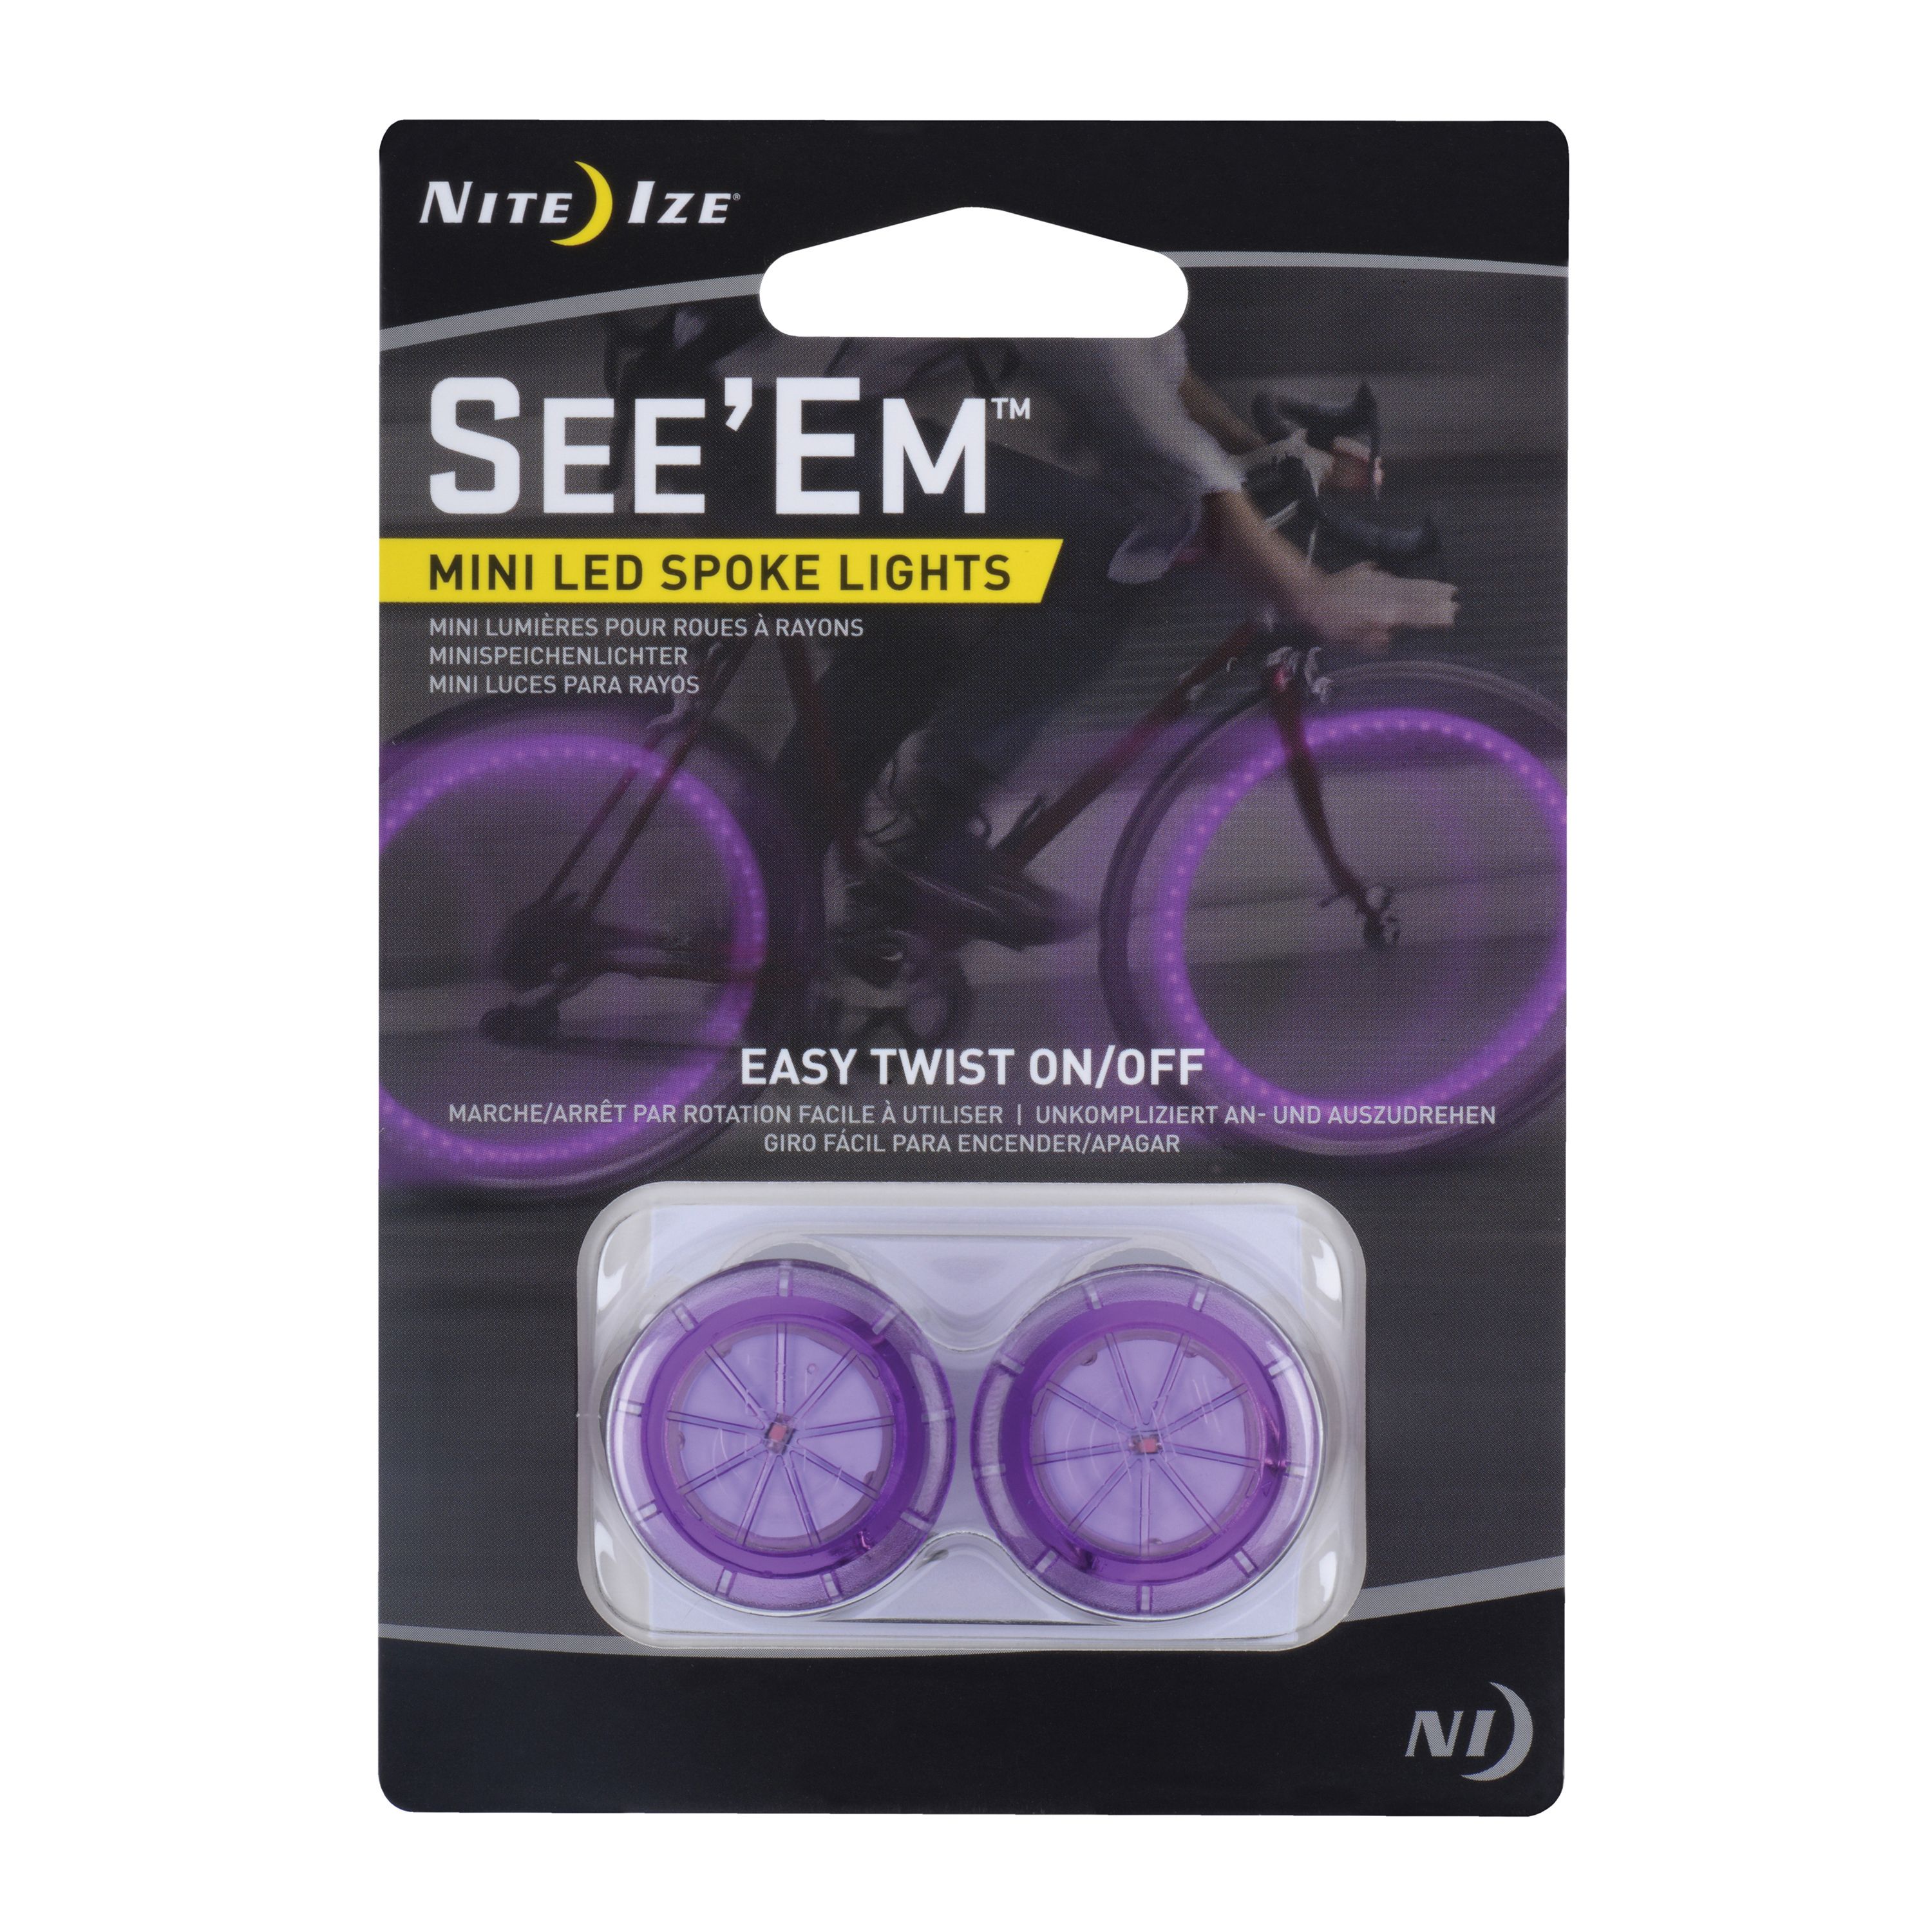 Nite Ize See 'Em Mini LED Bicycle Spoke Lights, Wheel Lights For Nighttime Visibility + Safety, 2 Pack, Purple - image 1 of 7